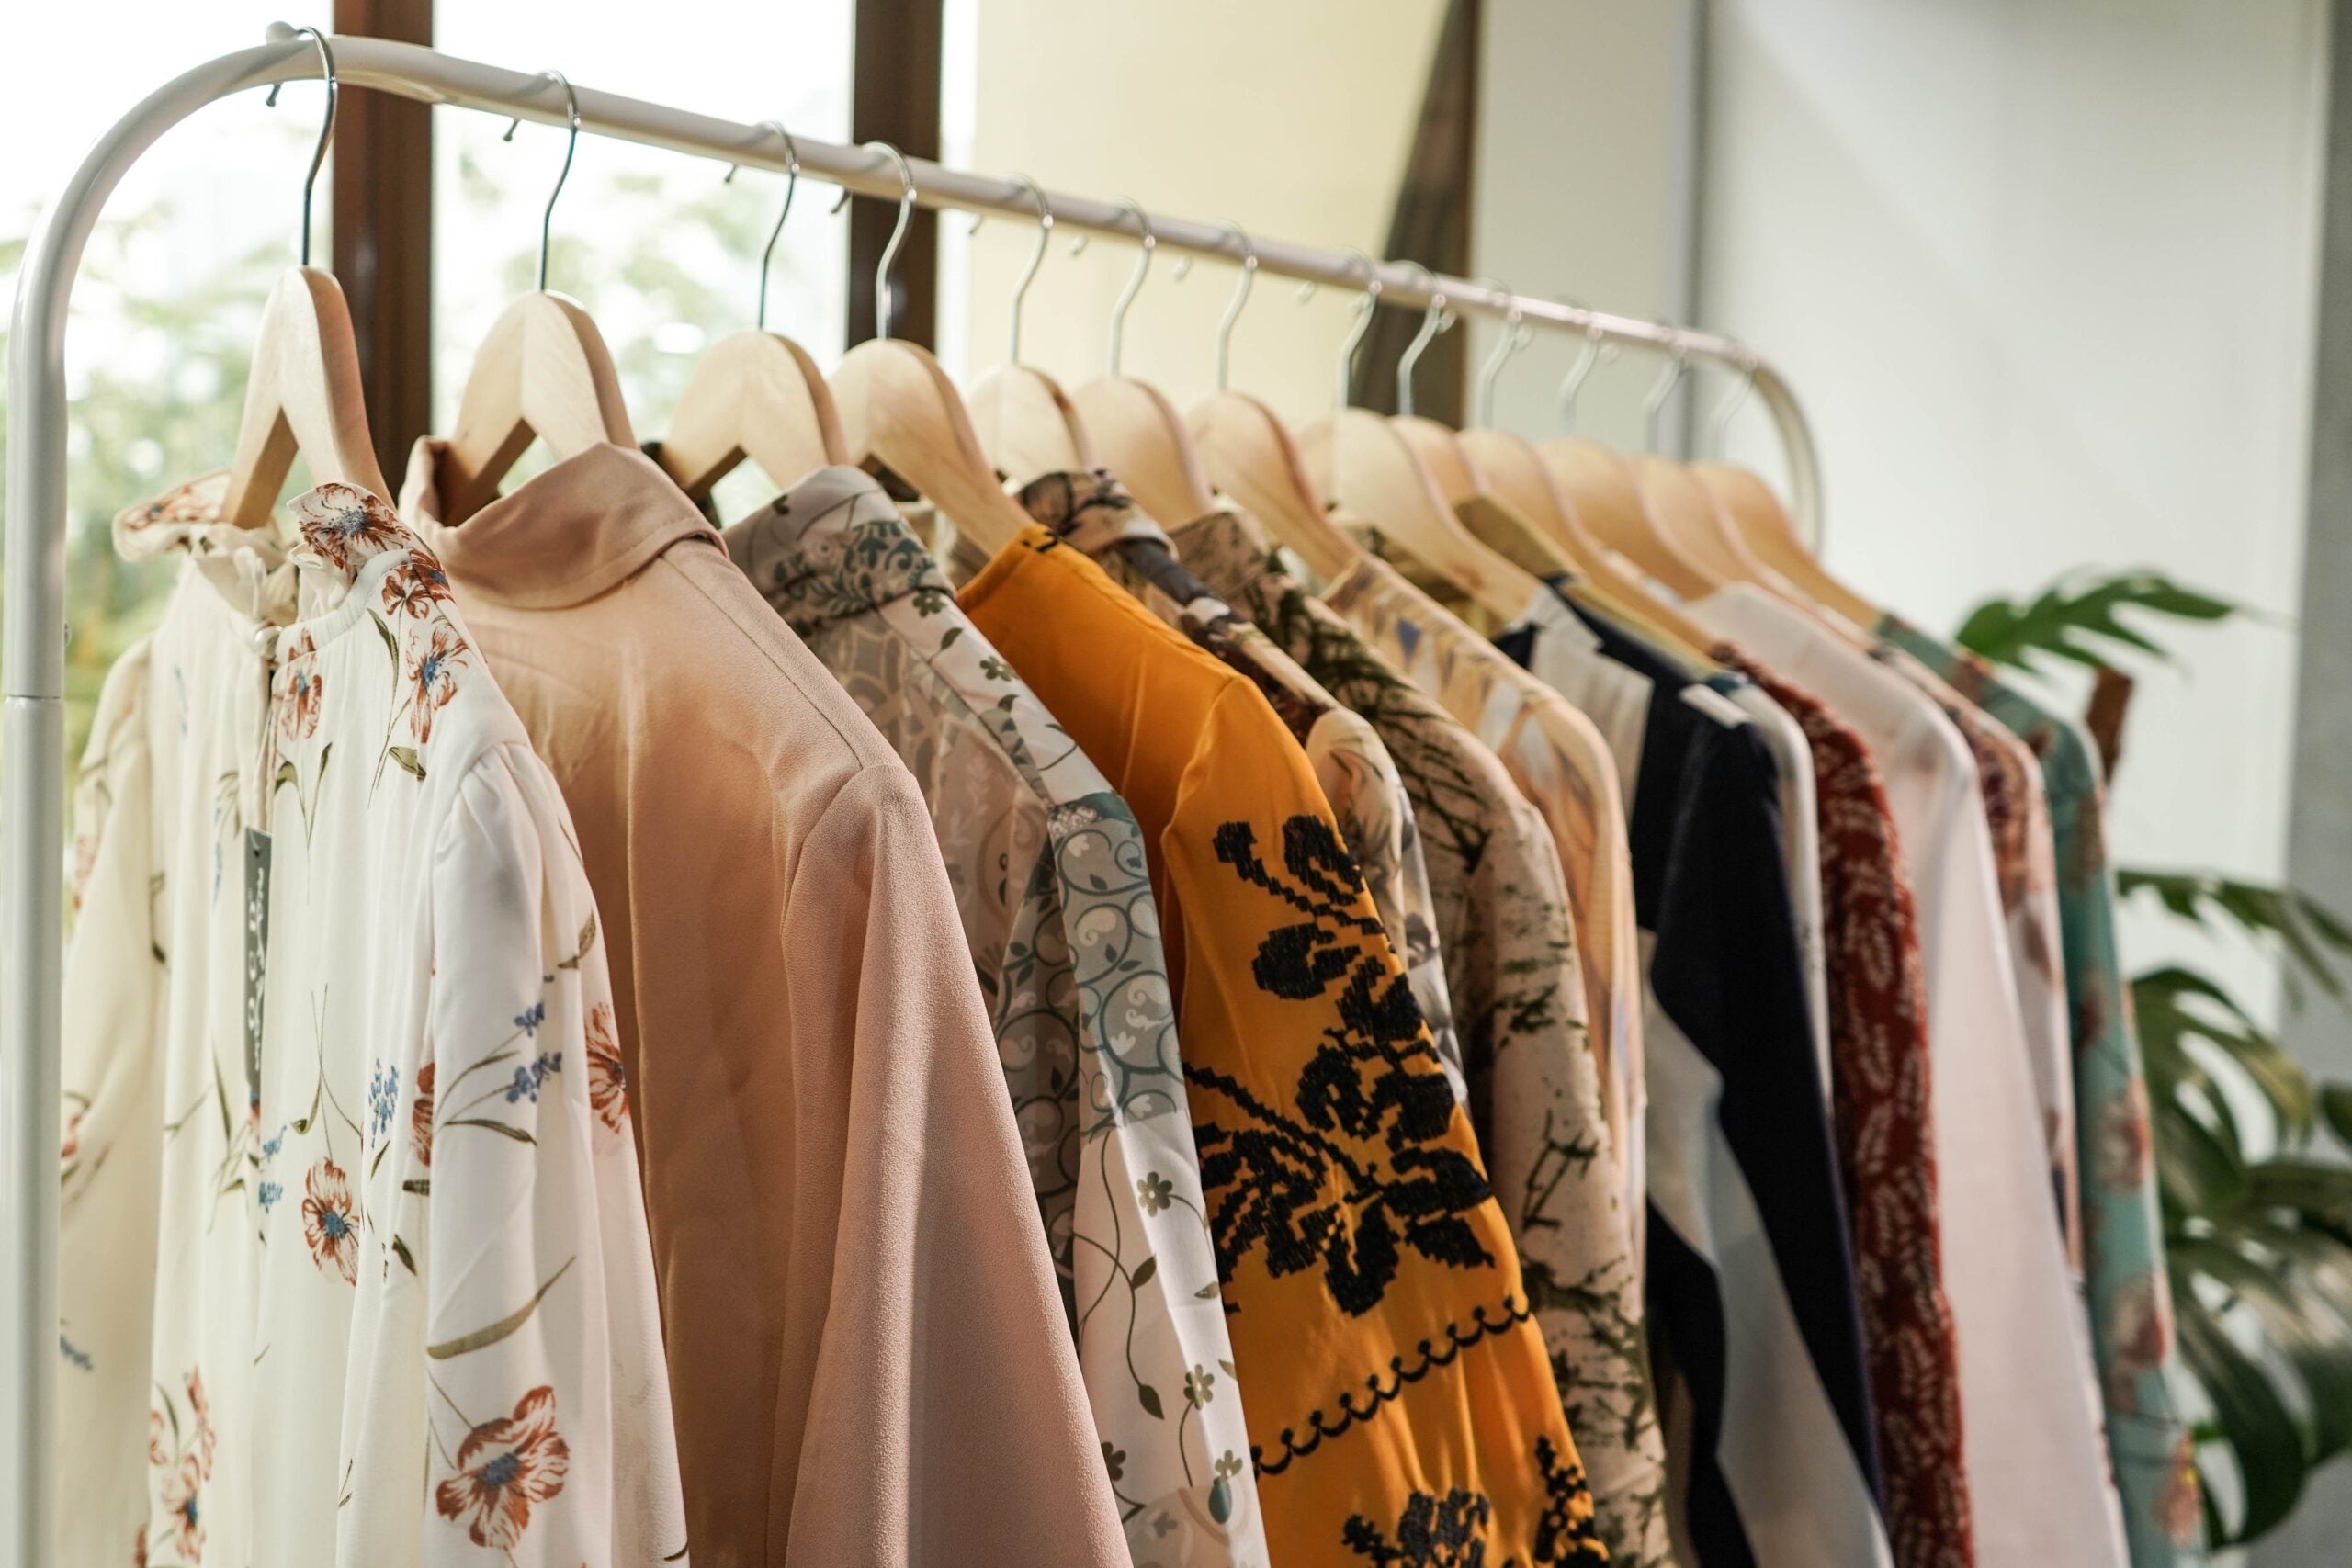 Clothing rentals aren't necessarily sustainable | Popular Science